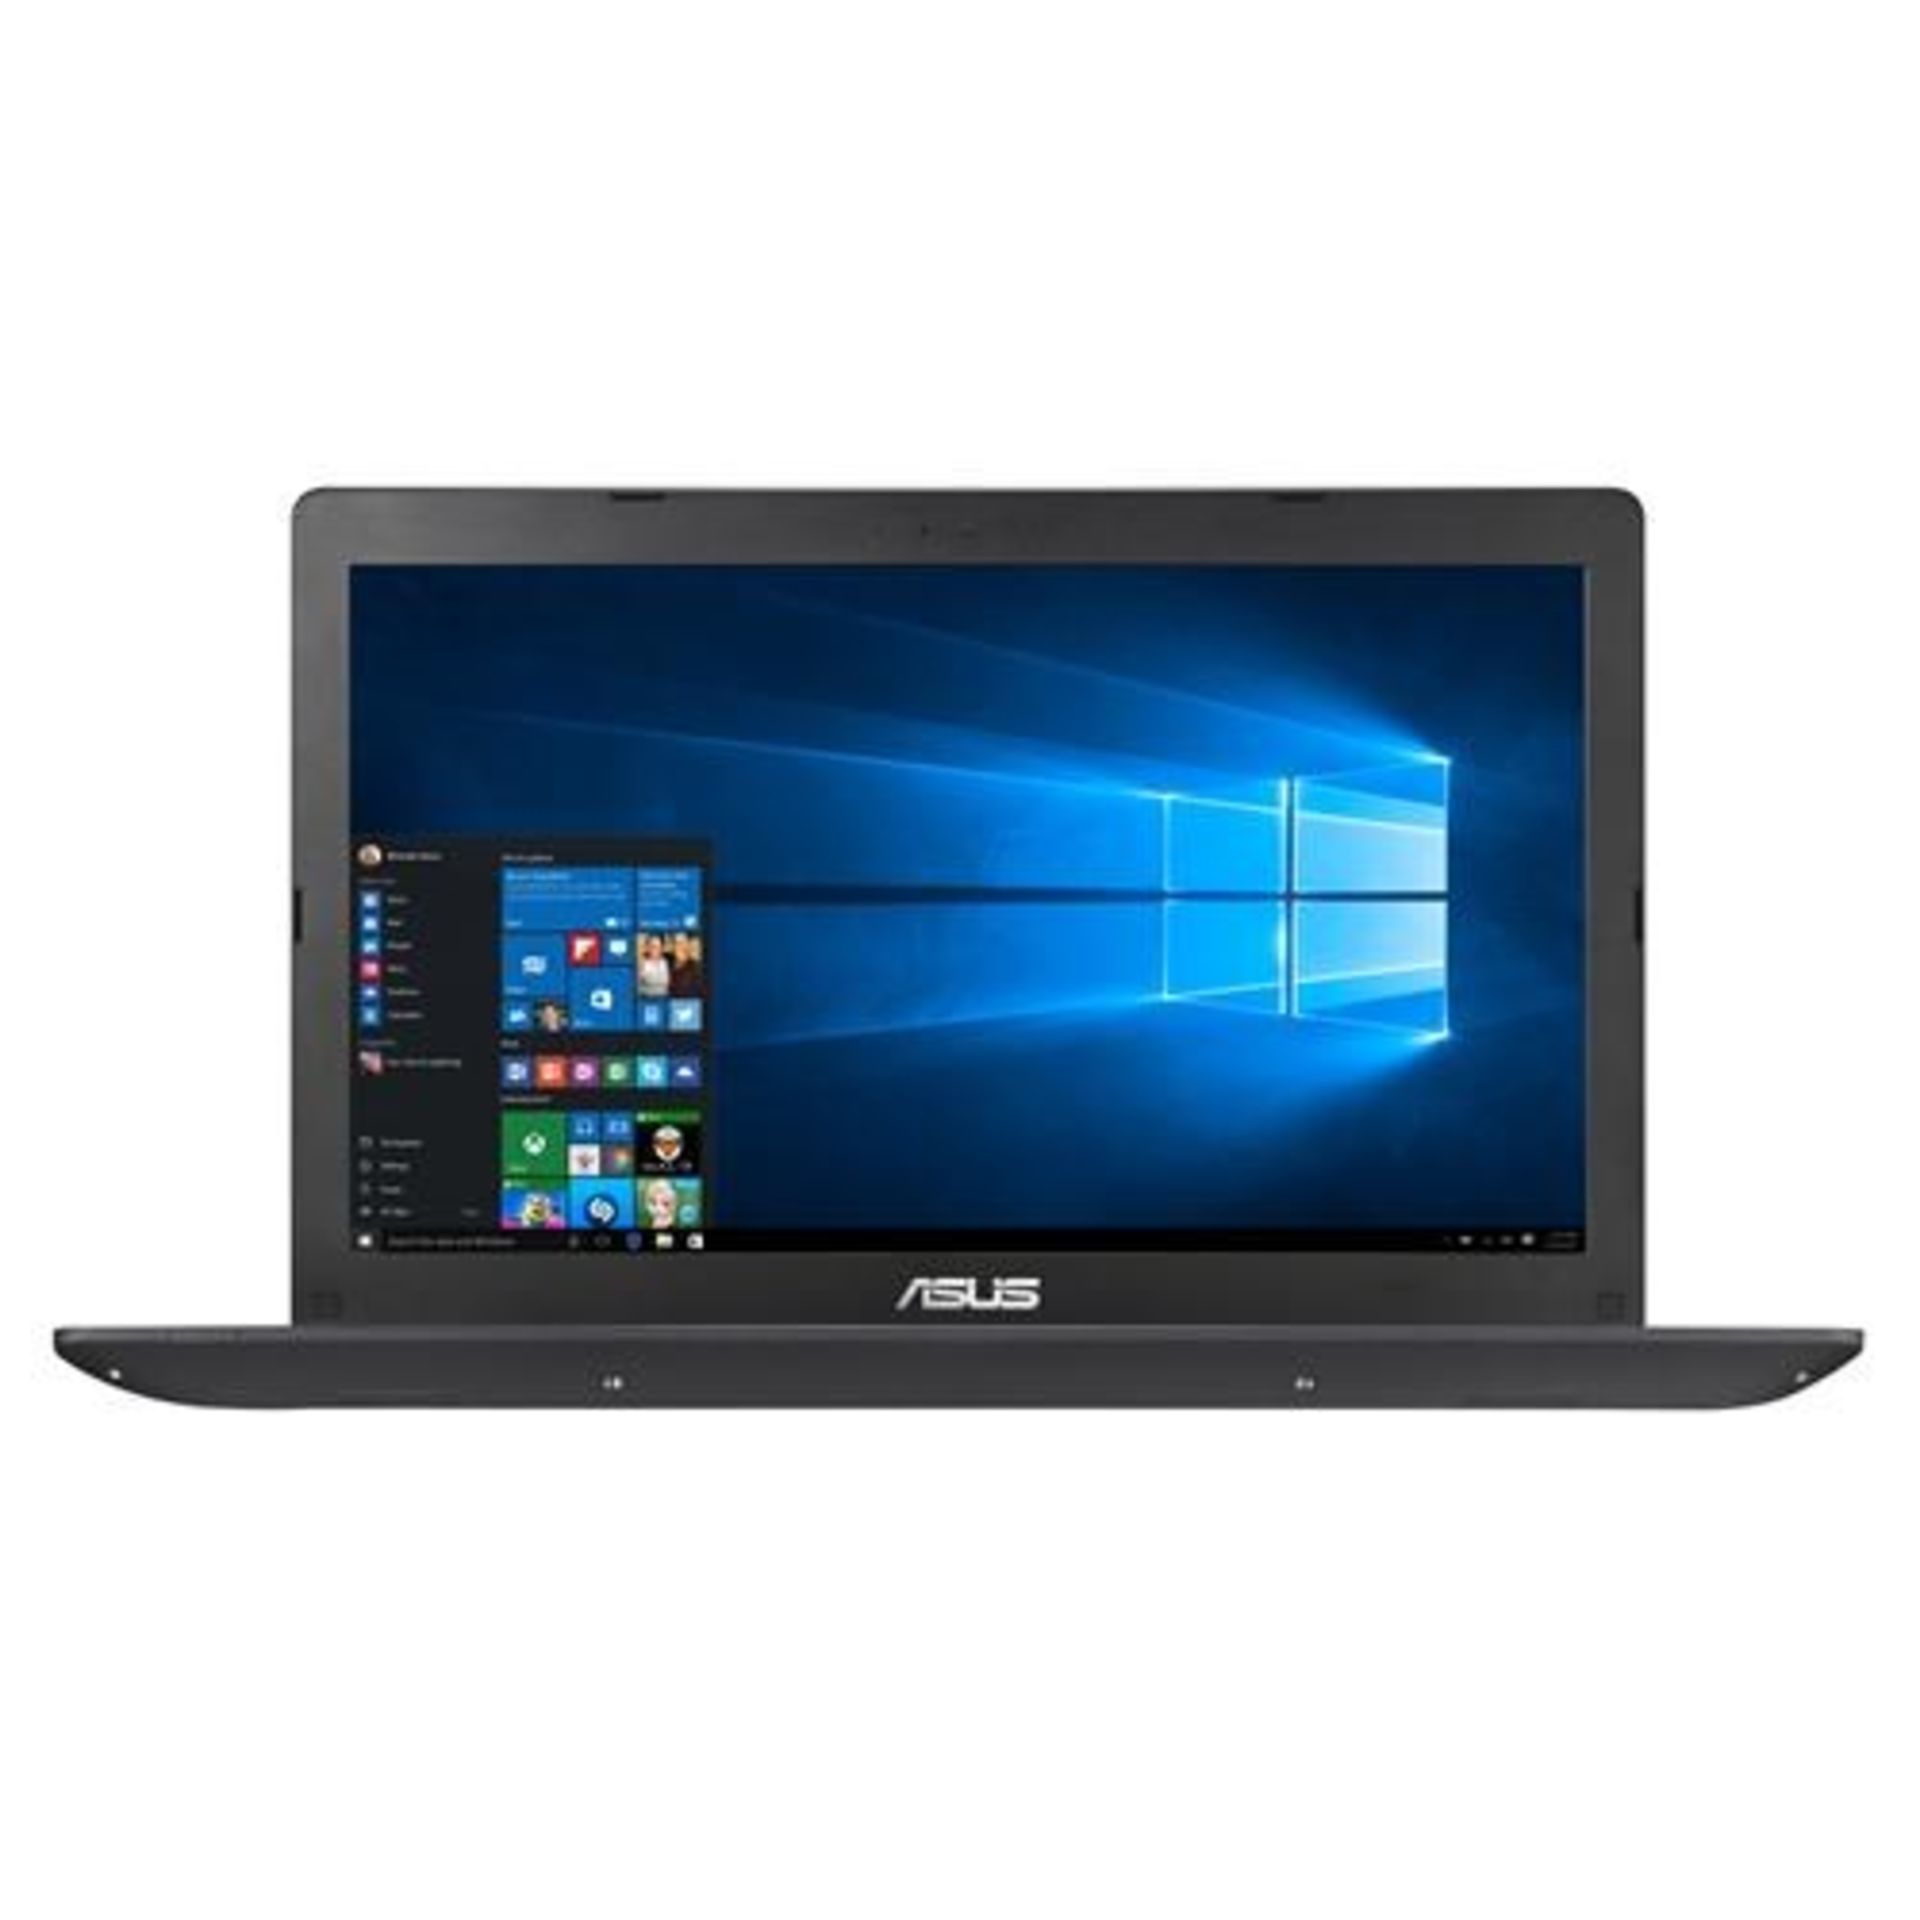 V Grade A Asus F553M Laptop - 4Gb Ram - 1Tb HDD - Windows 8.1 - Intel Celeron N3540 ISP £226 (